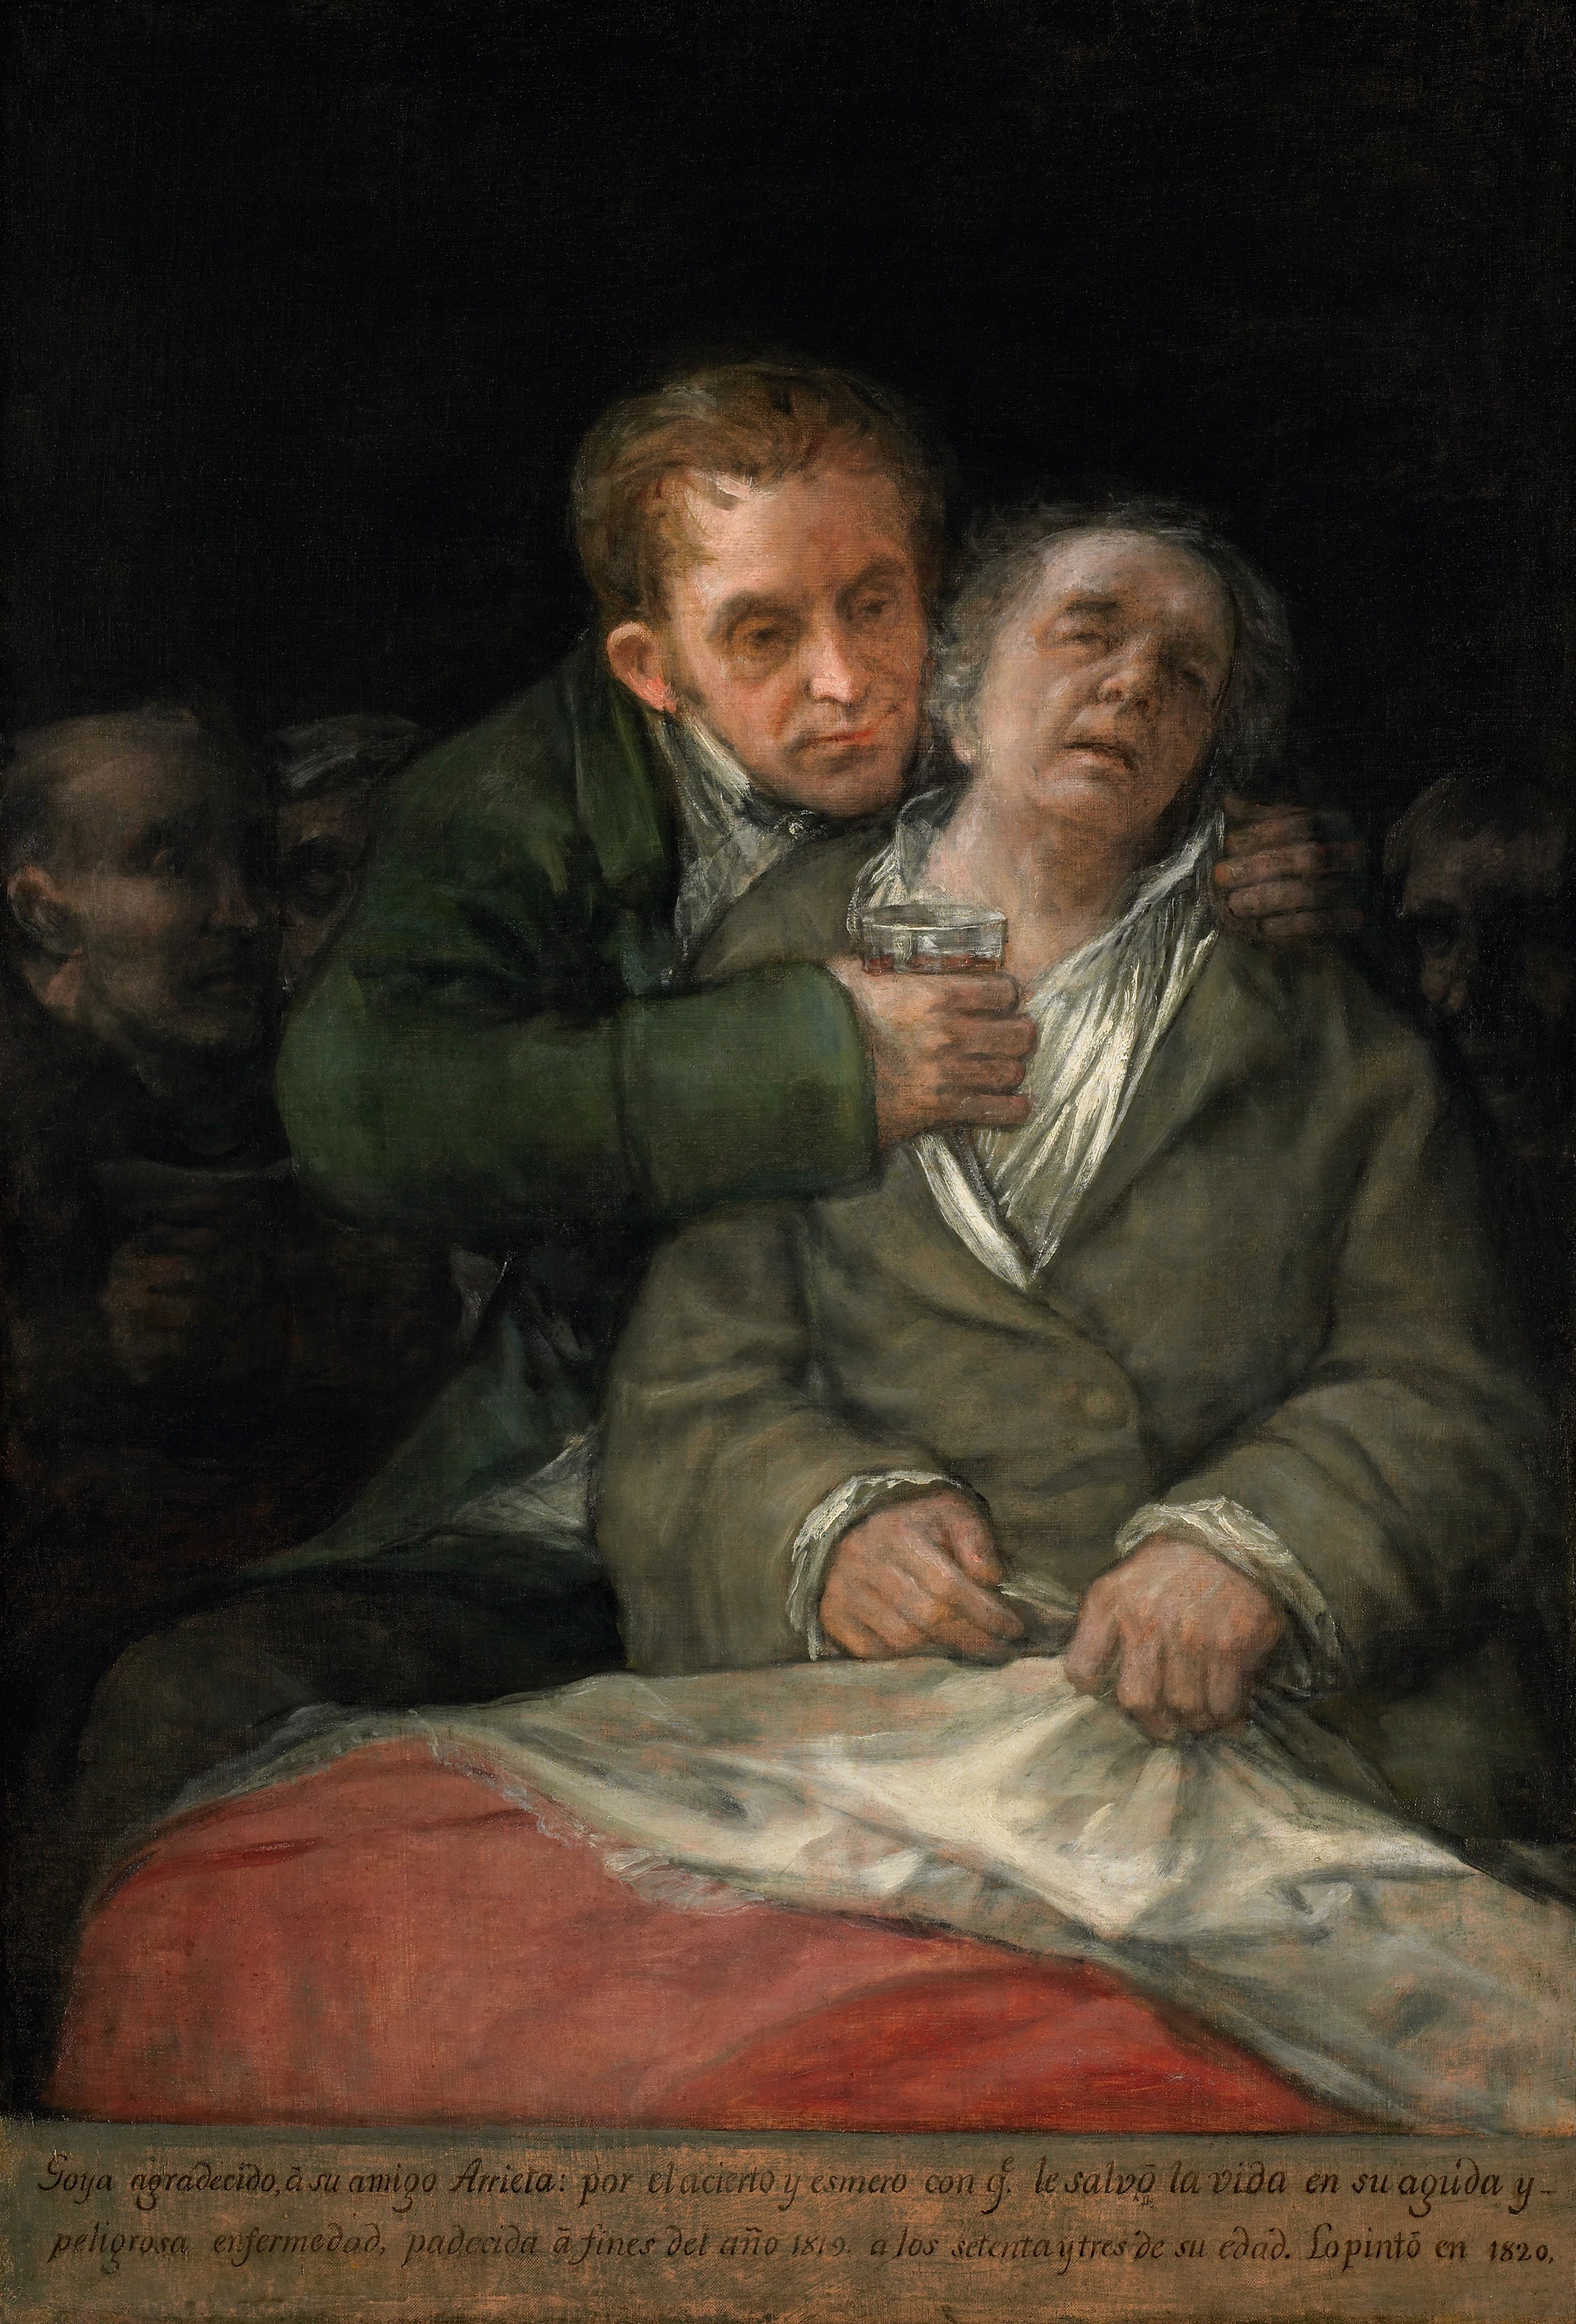 Self-Portrait with Dr. Arrieta, Francisco de Goya y Lucientes